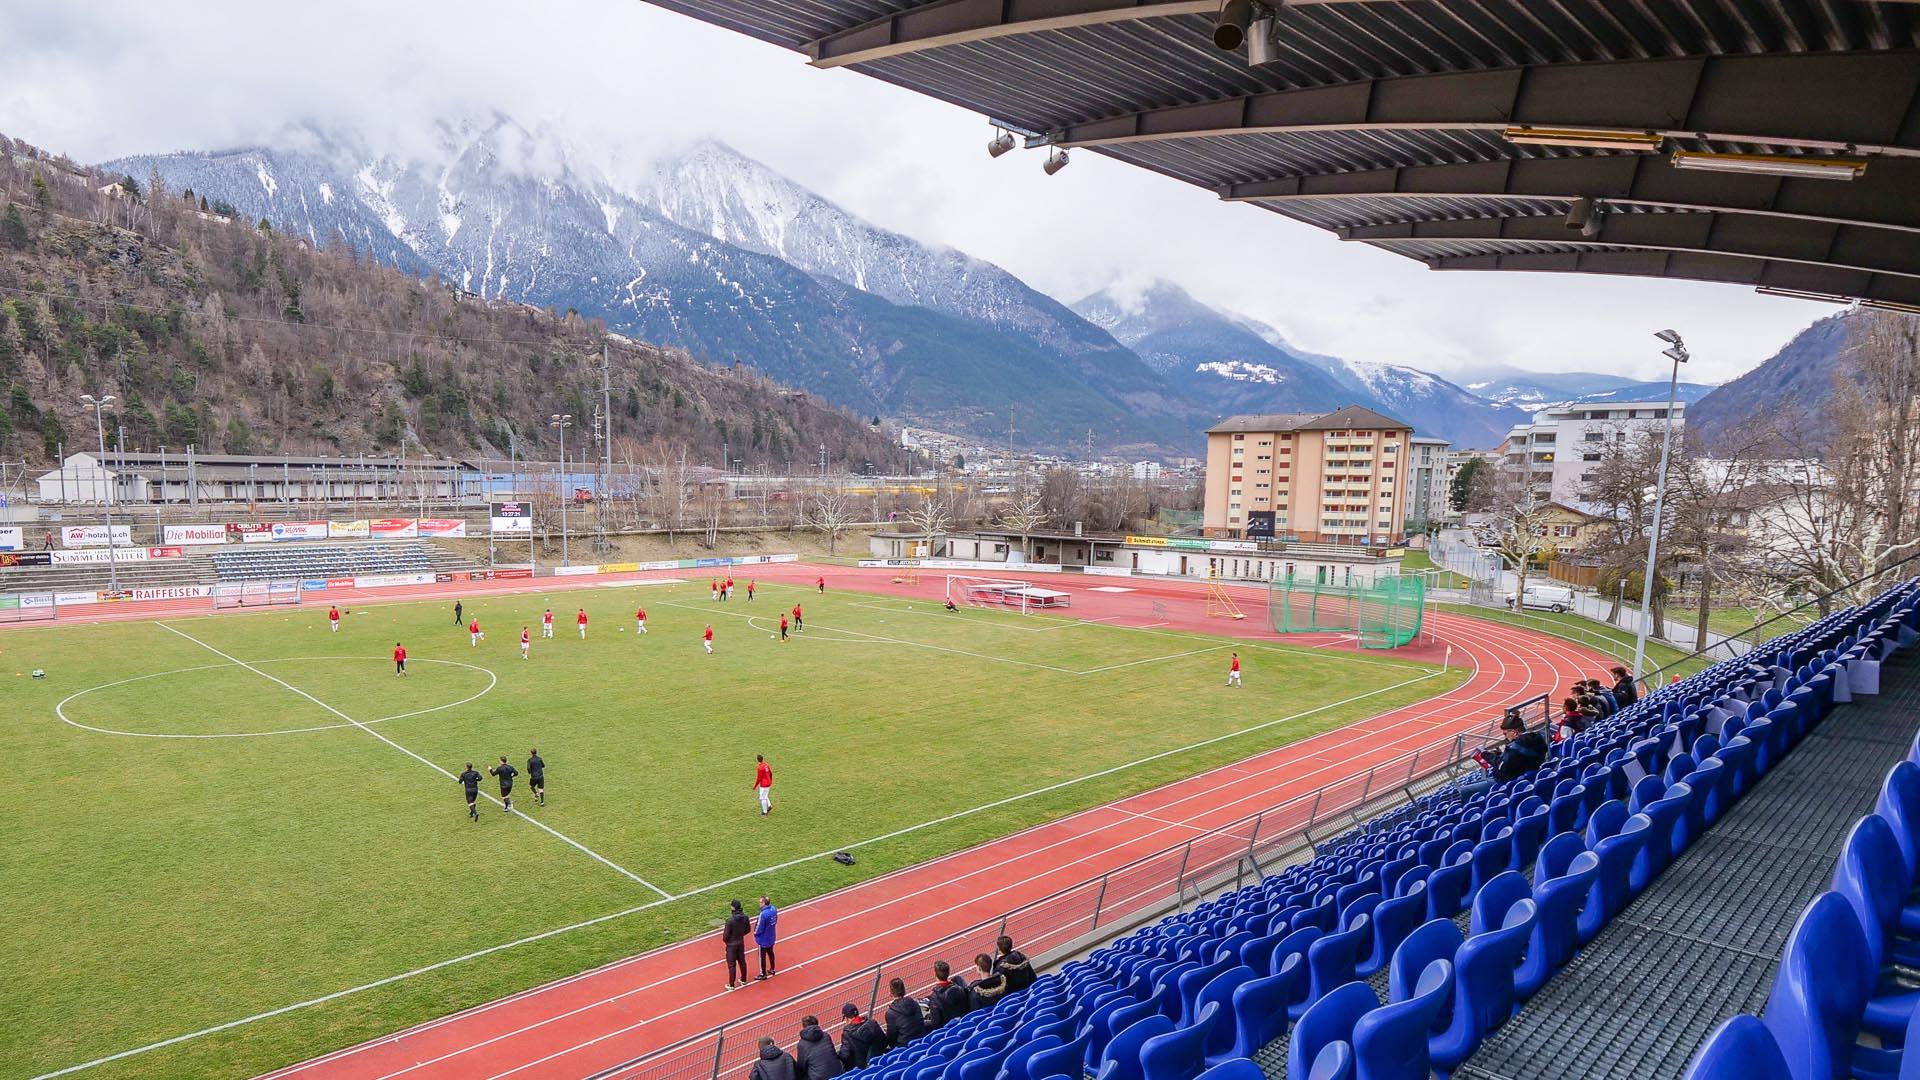 Promotion League Schweiz